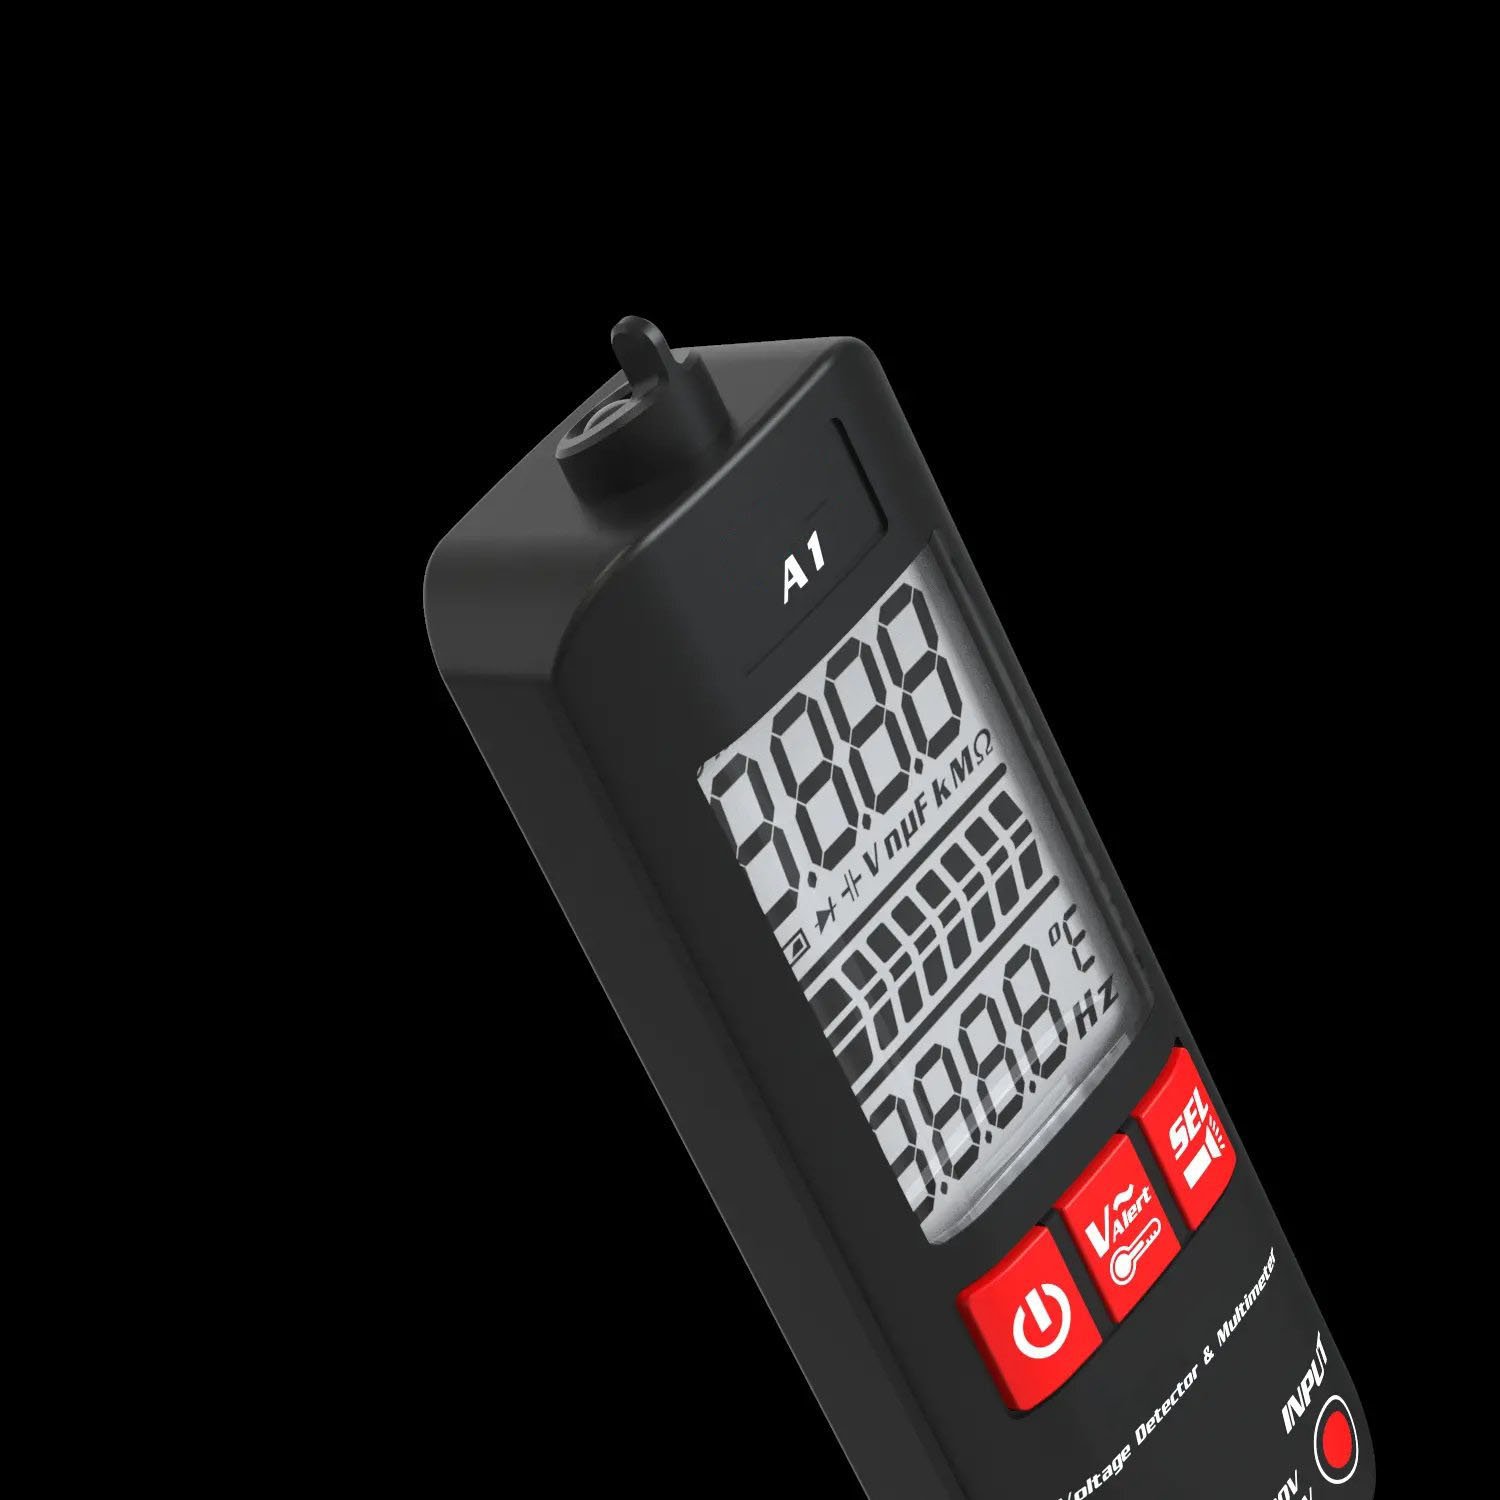 🔥  48% OFF🔥A1 Fully Automatic Anti-Burn Intelligent Digital Multimeter